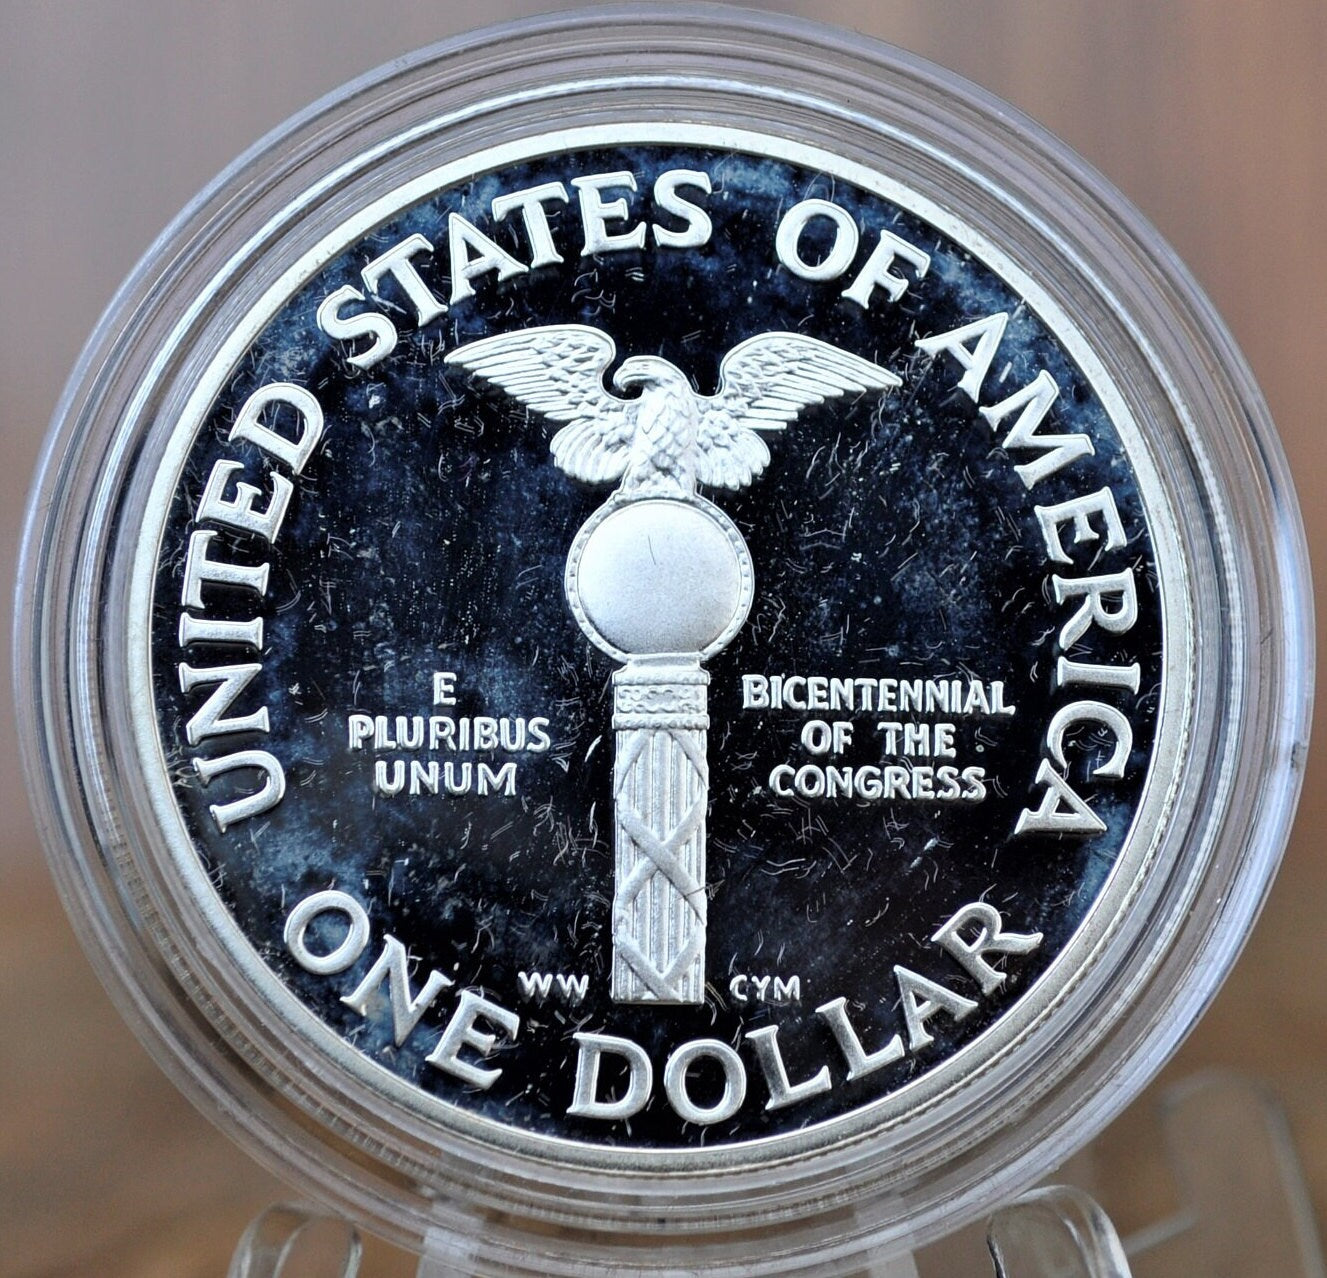 1989-S U.S. Congress Bicentennial Silver Dollar - In Original Mint Case - Proof, Silver - Congress Commemorative Silver Dollar 1989